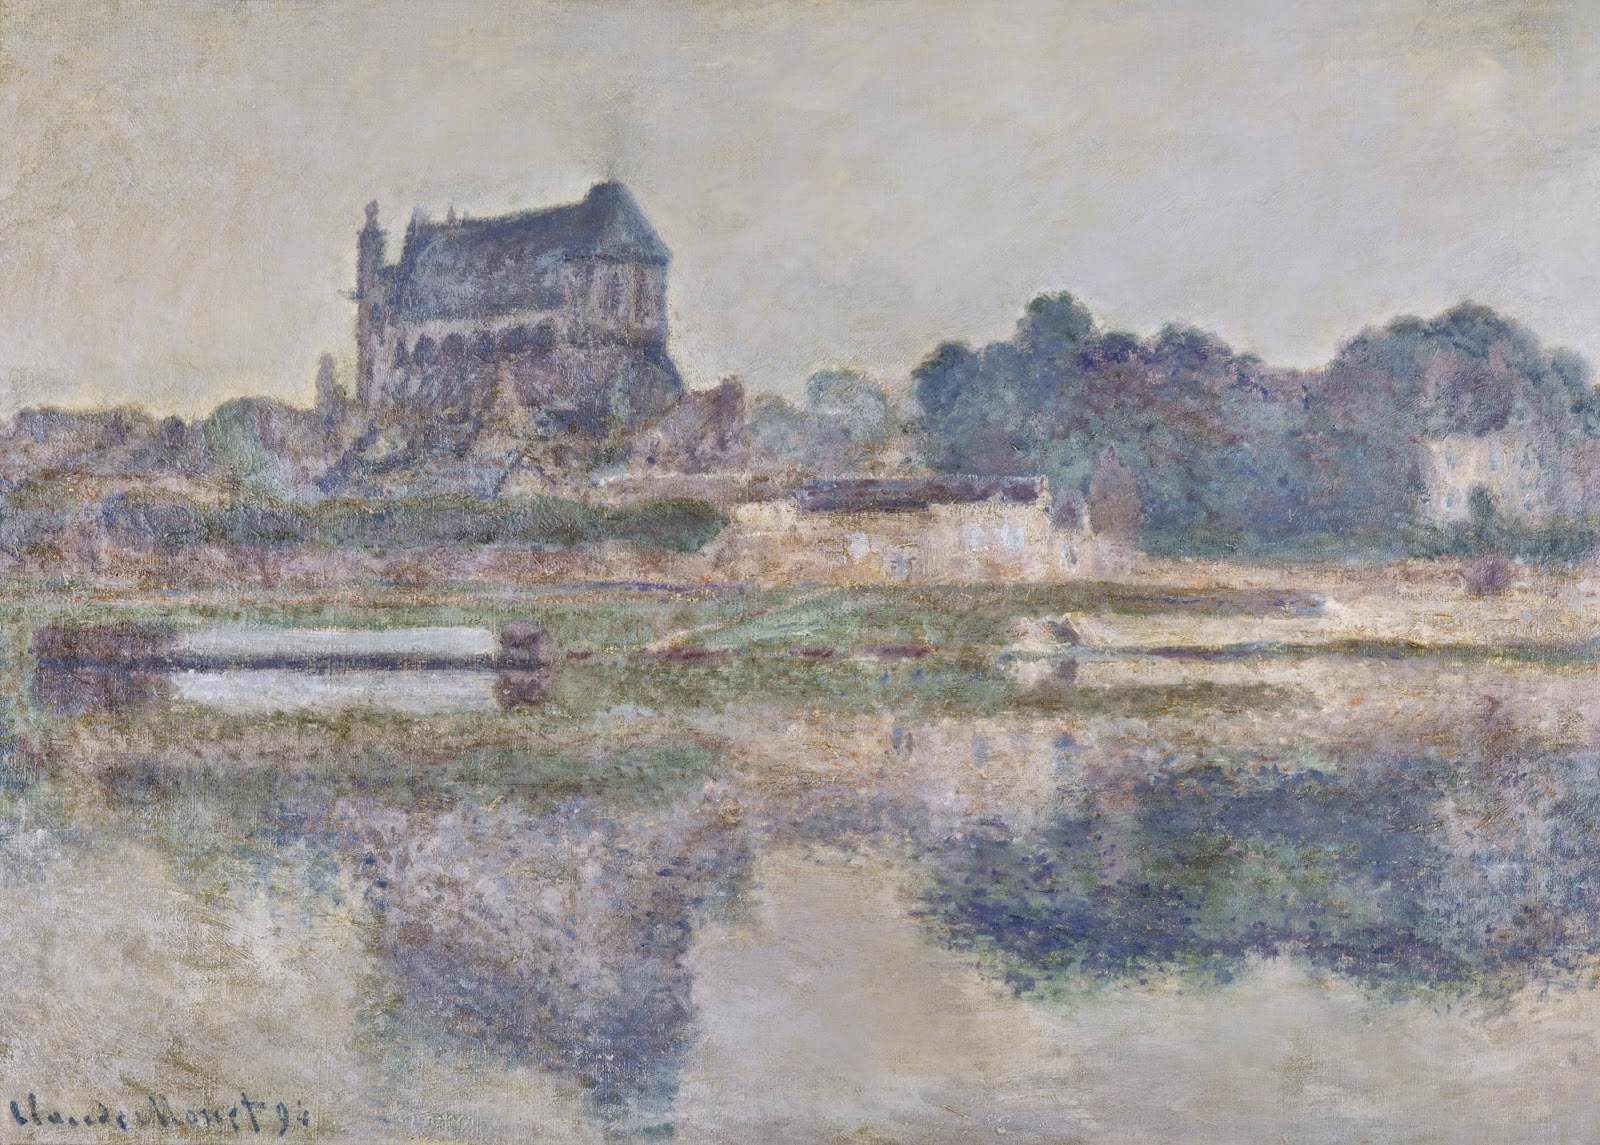 Claude+Monet-1840-1926 (502).jpg